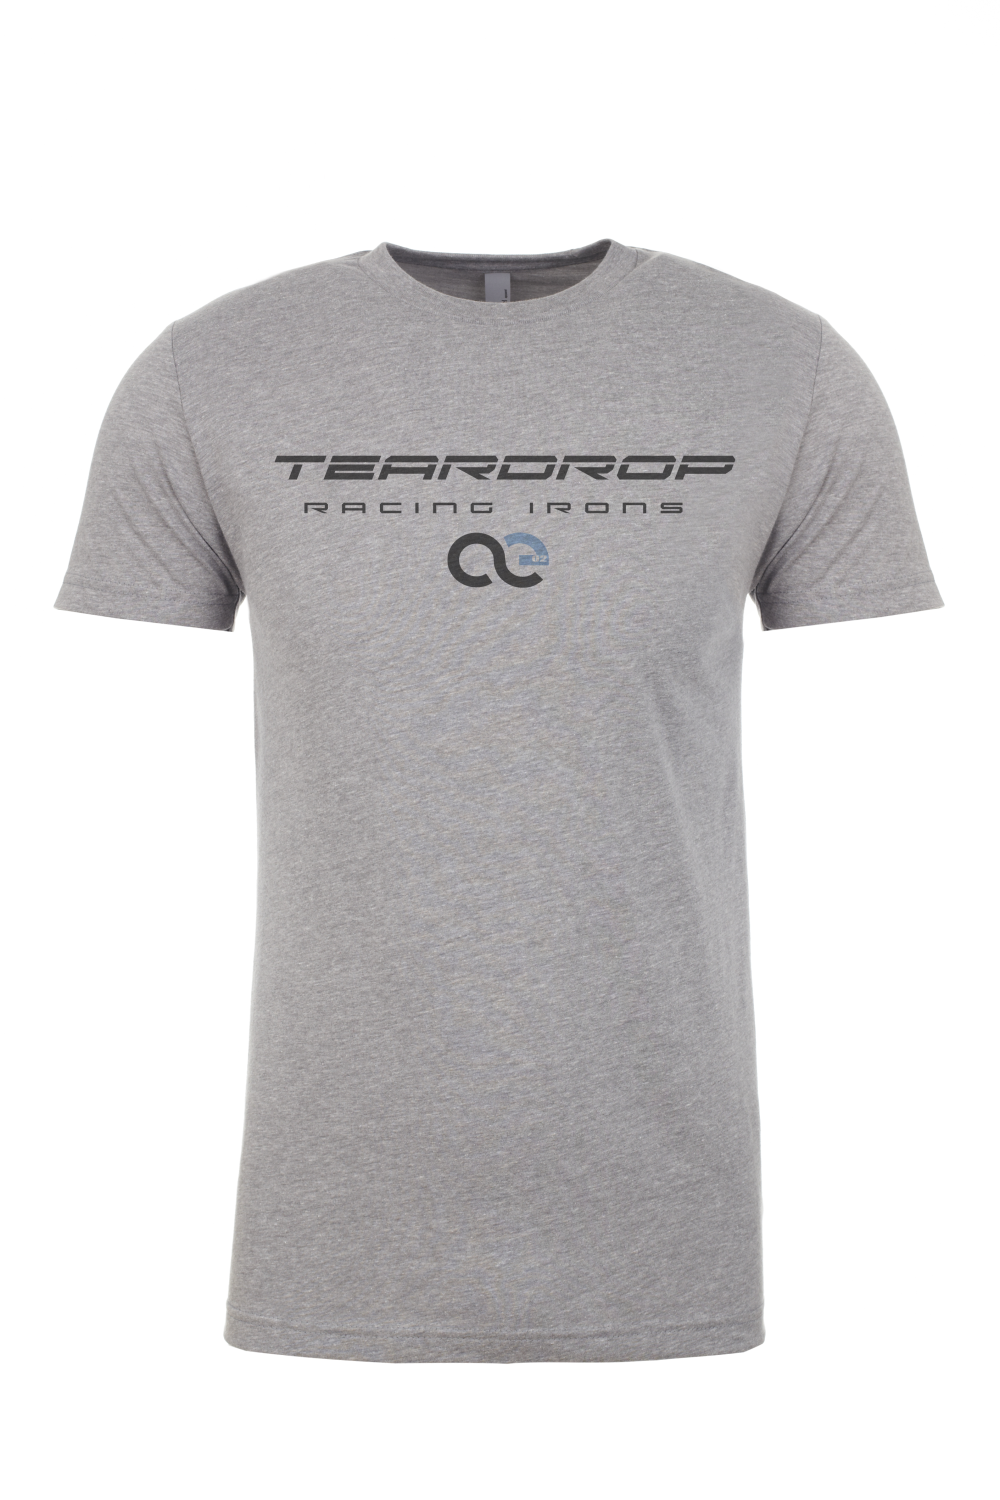 American Equus TearDrop Racing T-Shirt Front